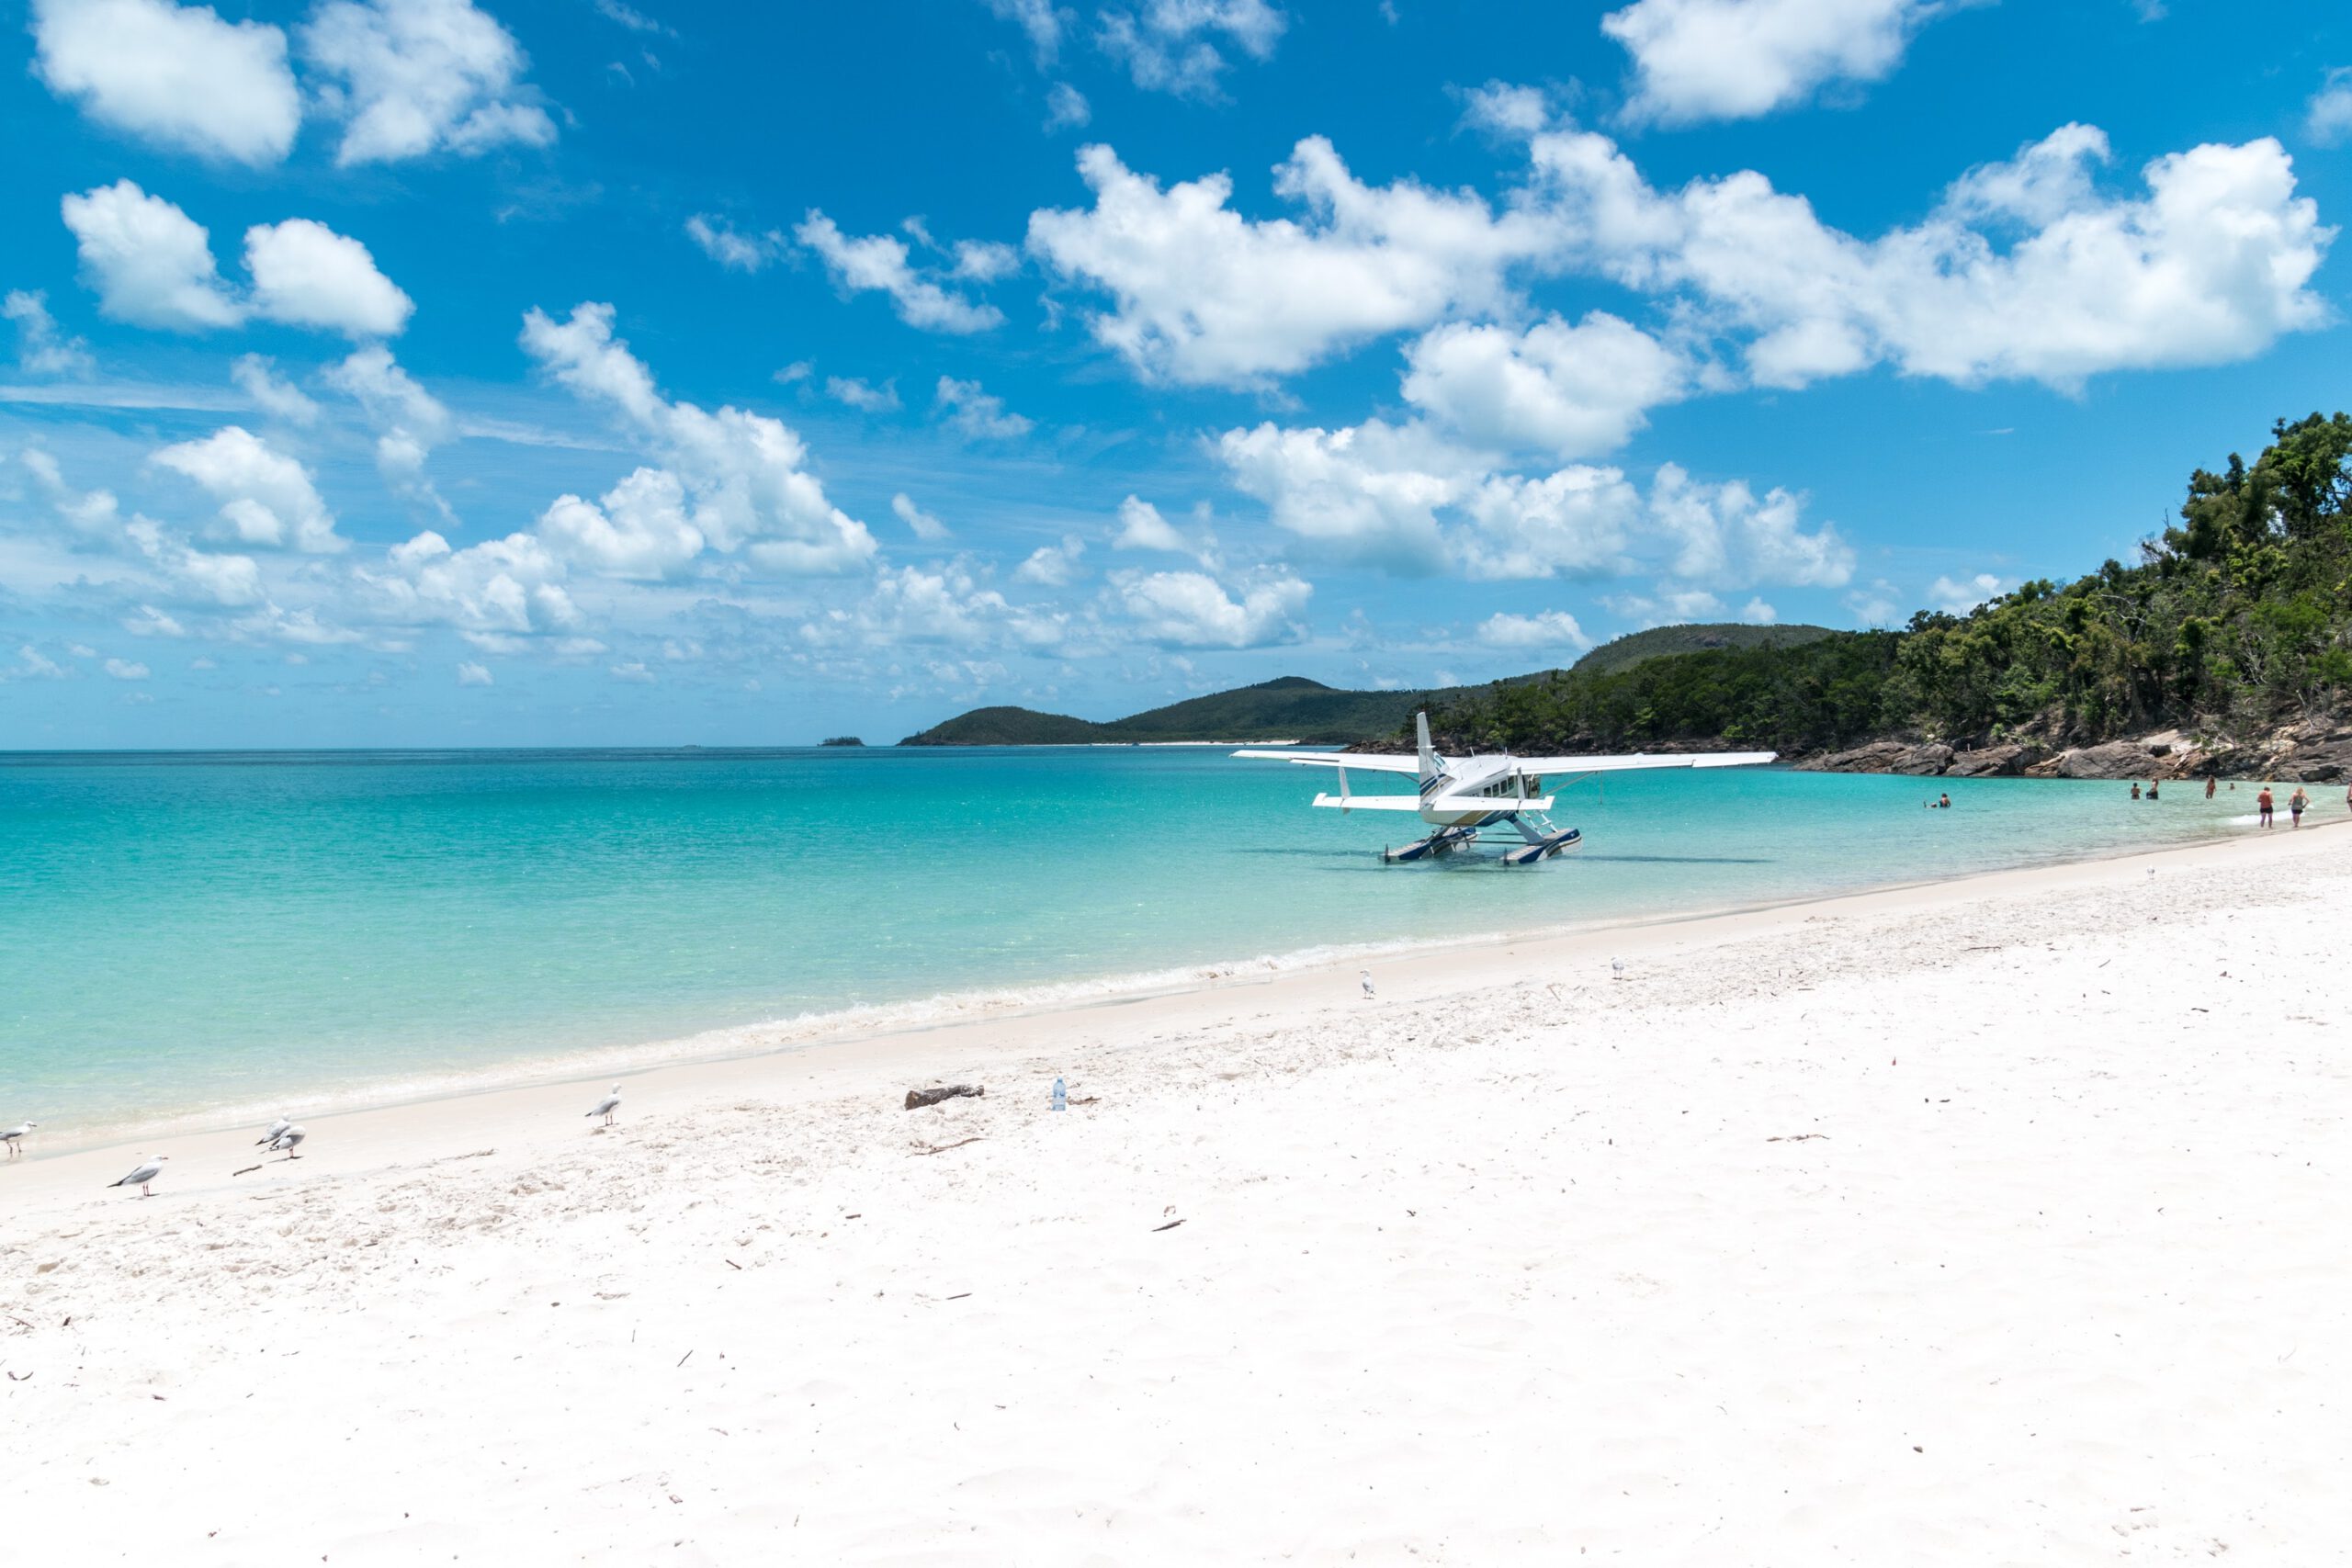 Australie-Whitsundays-hamilton island-vliegtuigje-strand-blauwe zee-wit strand-palmbomen-landschap